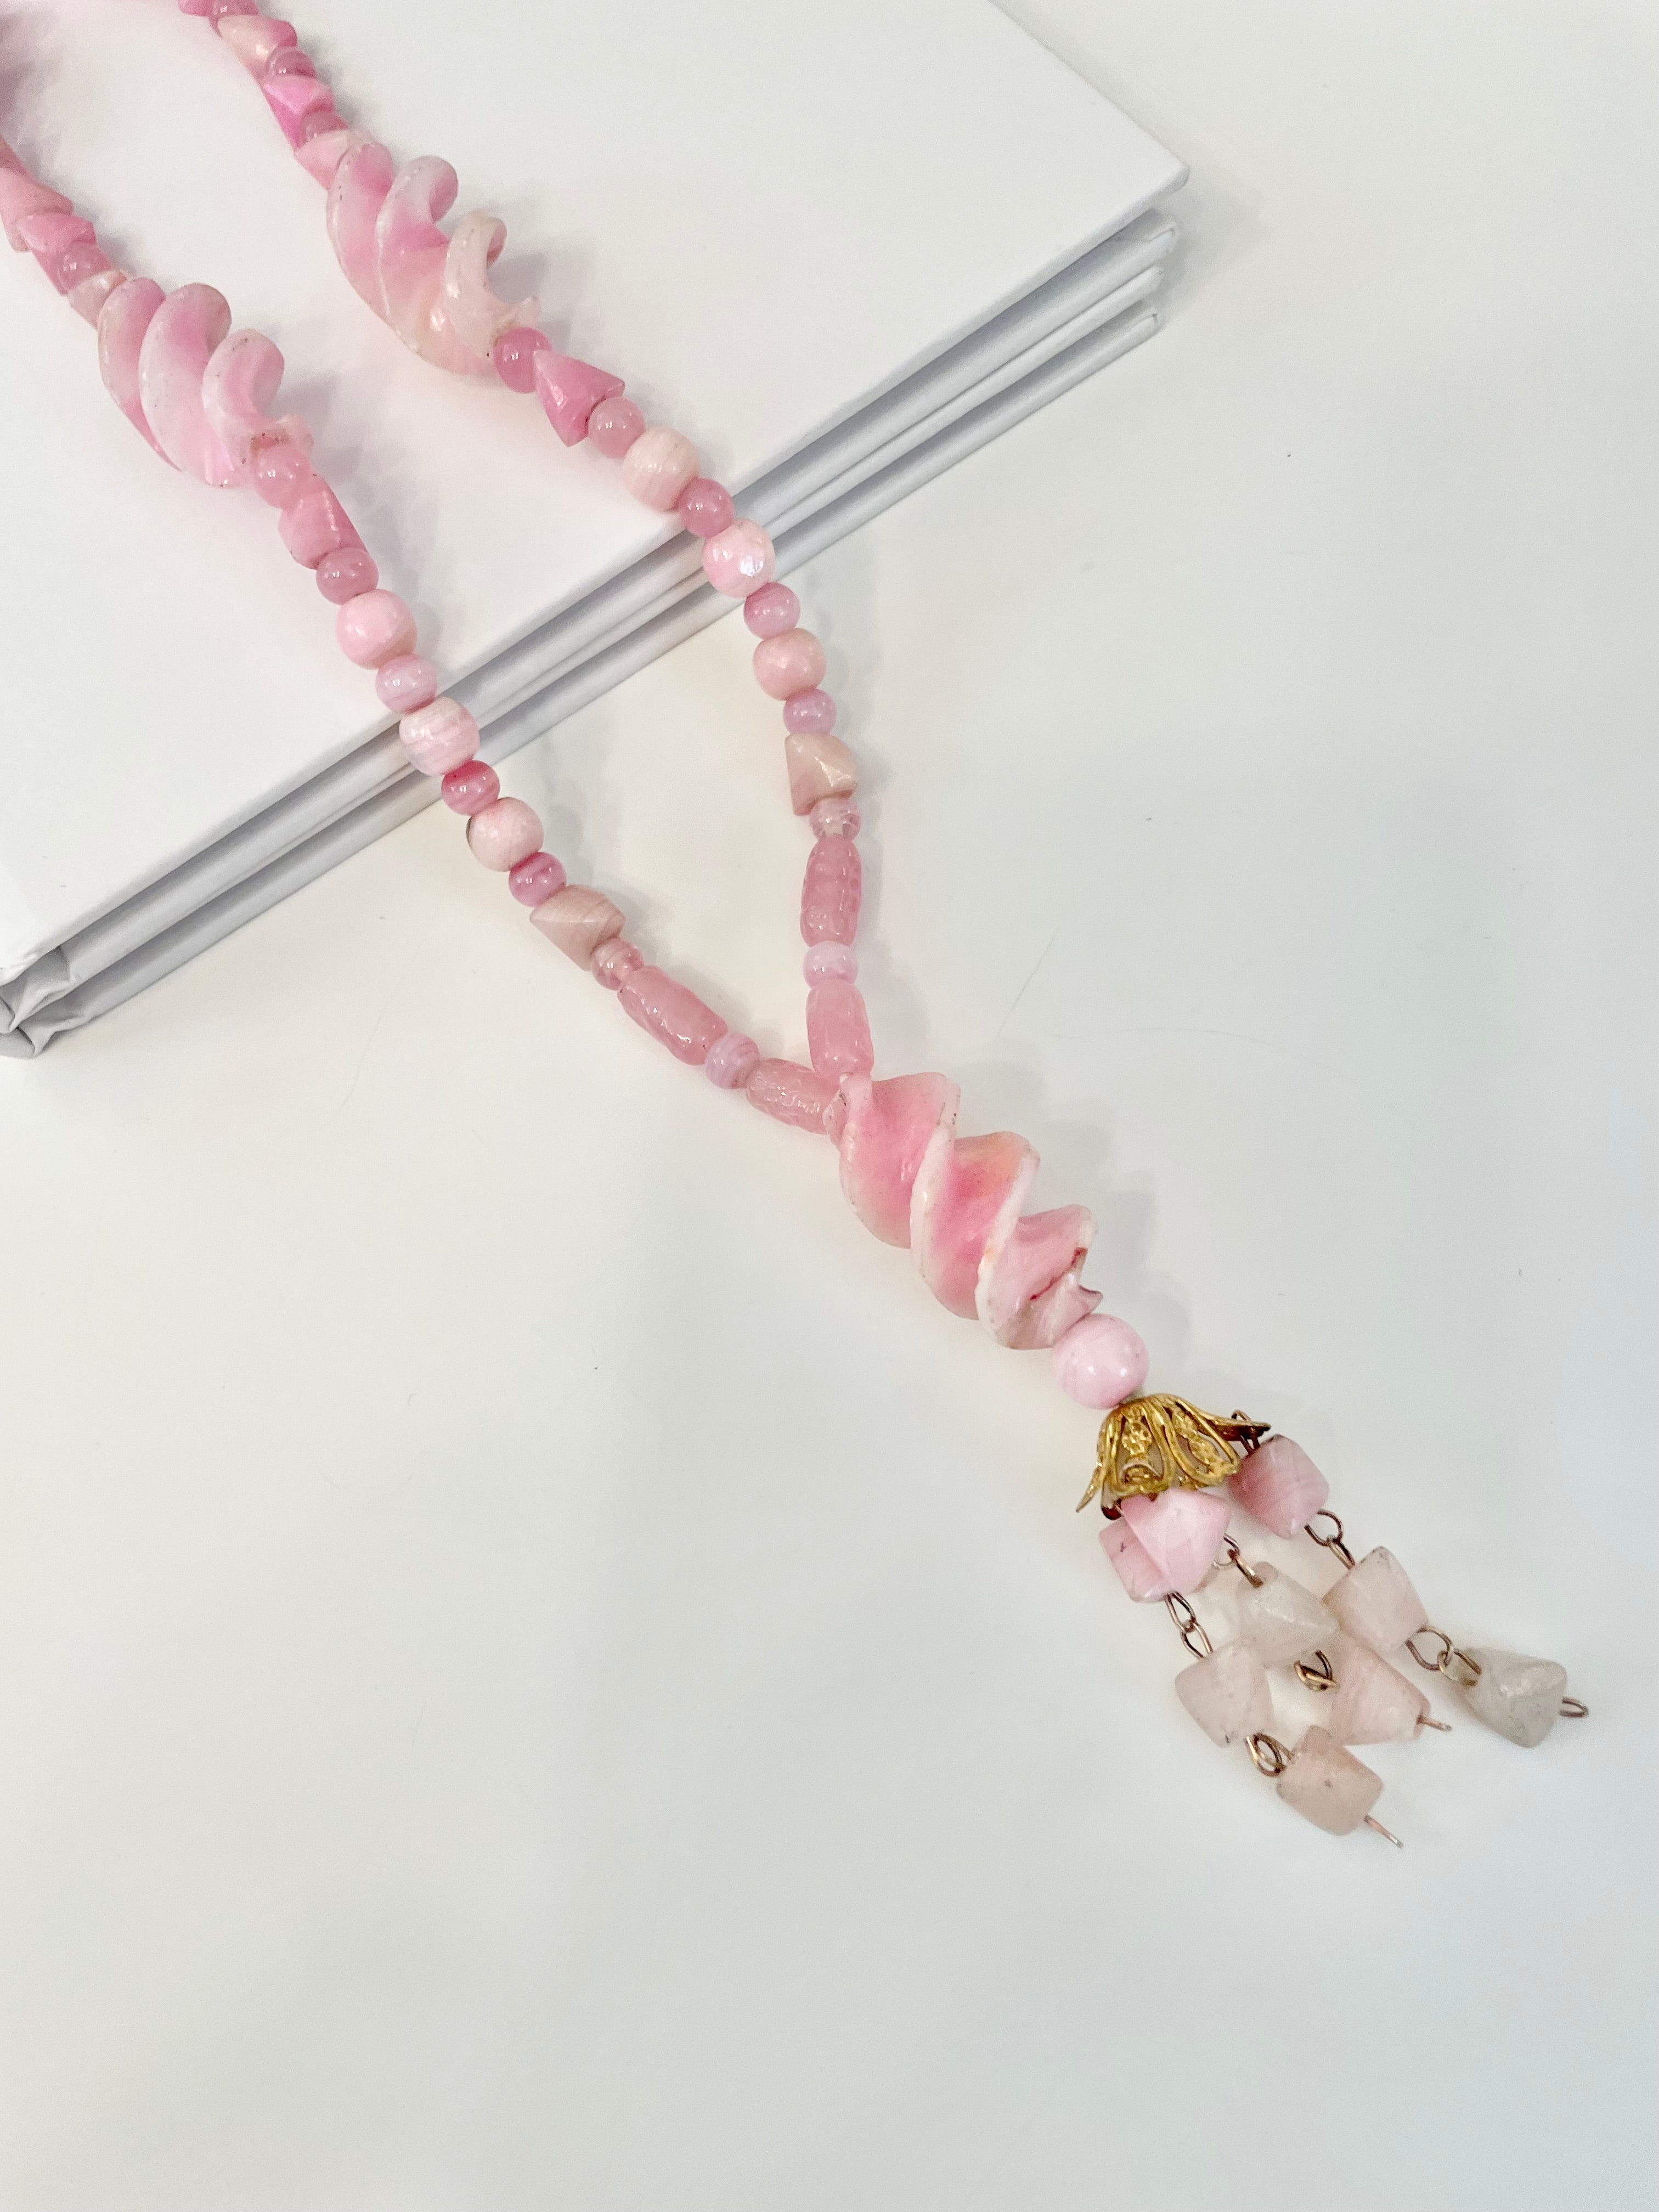 Vintage 1960's soft pink glass elegant long beaded necklace... so feminine!